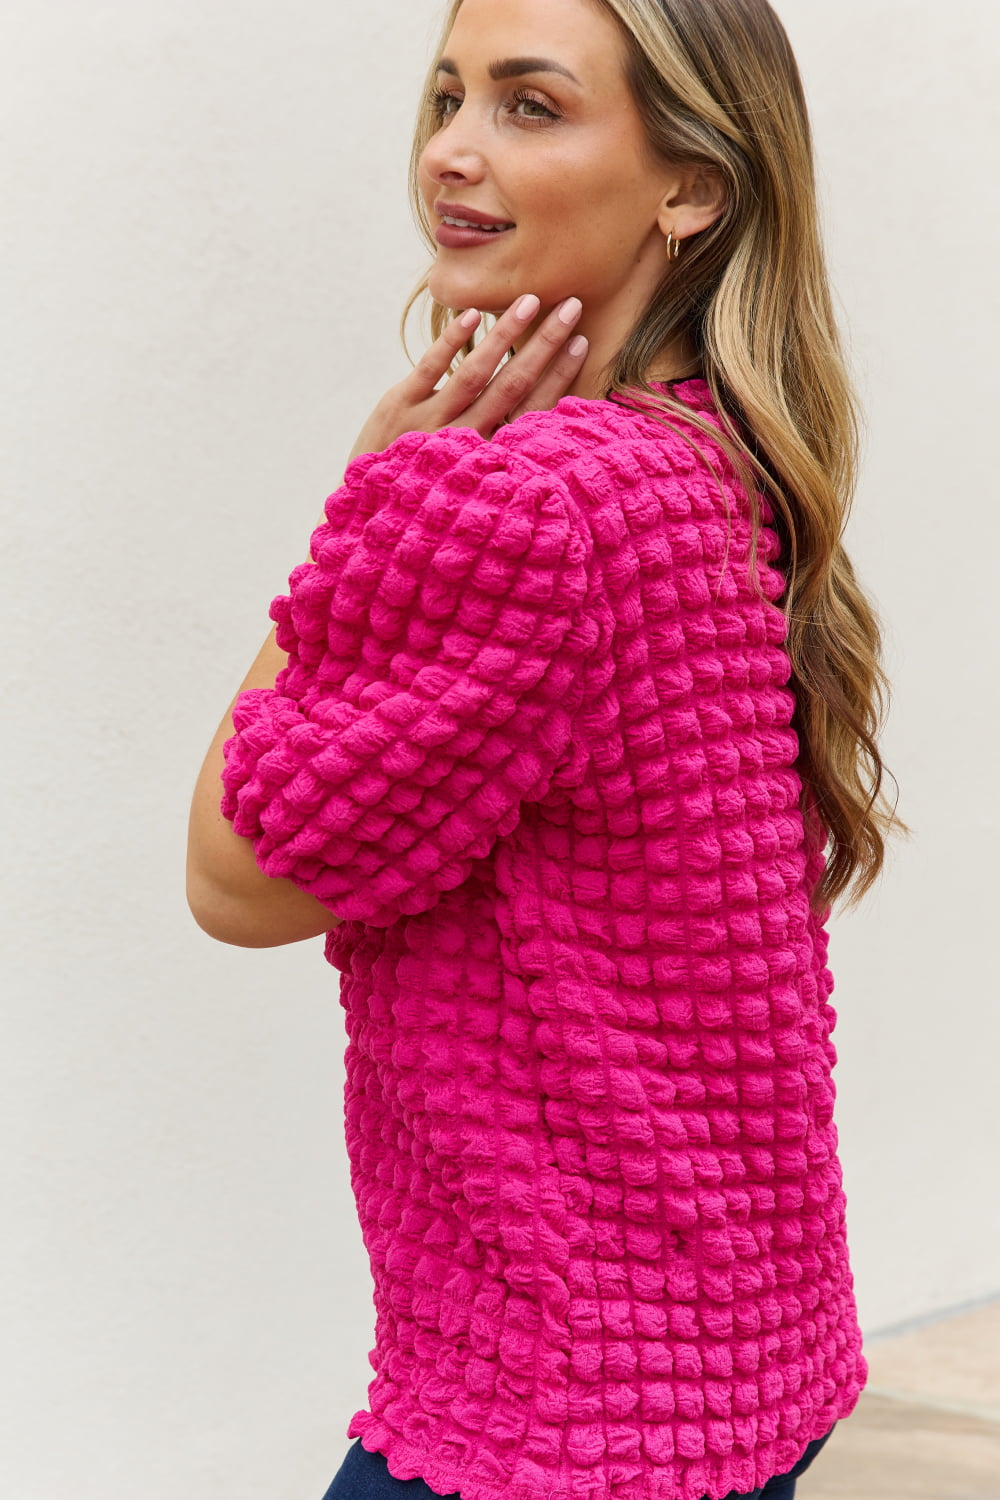 Hot Pink Bubble Textured Puff Sleeve Top - Tigbul's Fashion